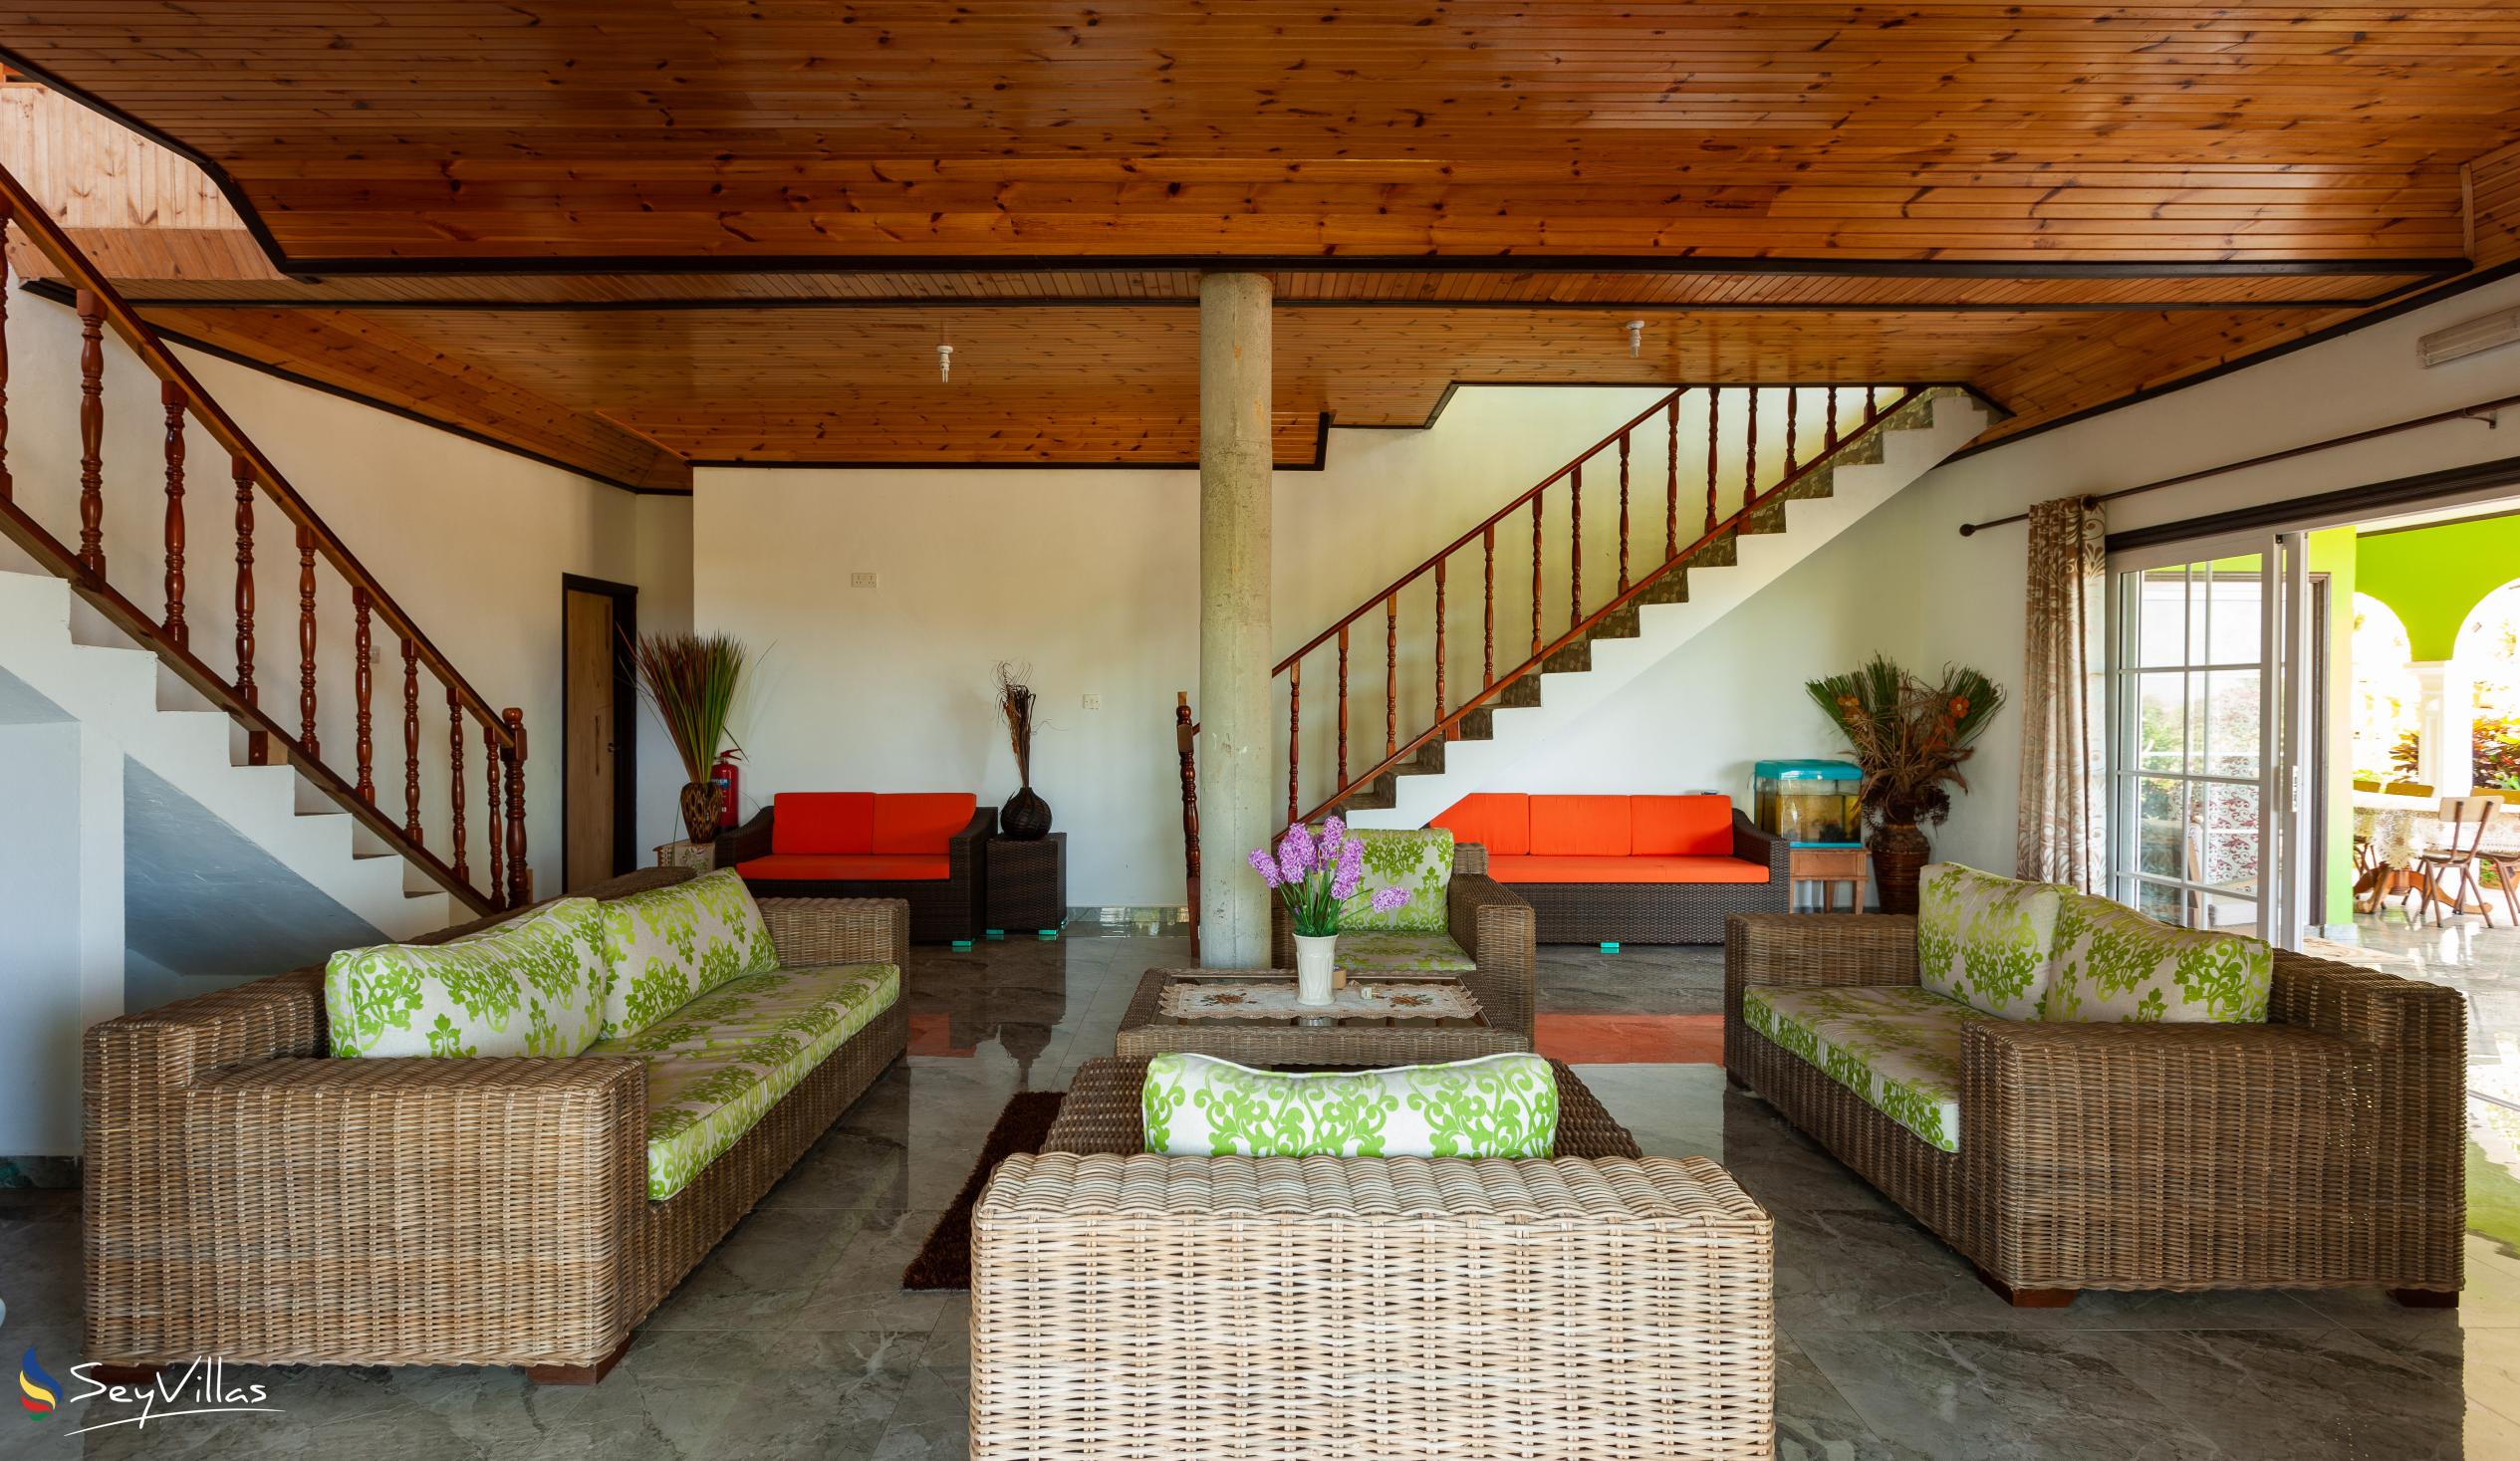 Foto 26: Villa Hortensia - Innenbereich - La Digue (Seychellen)